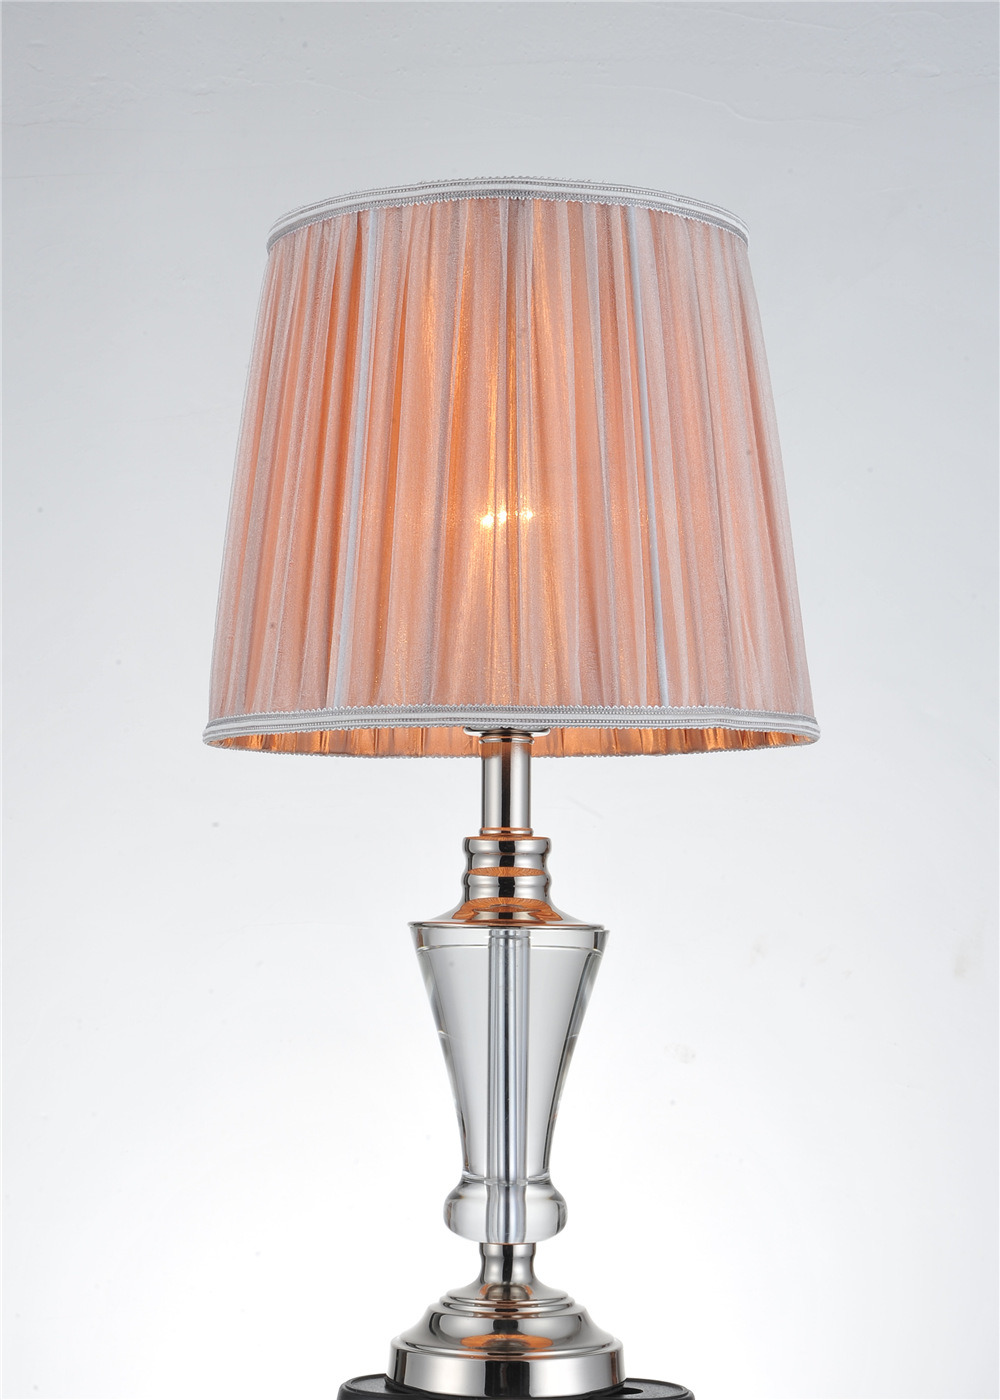 New Design Ipost LED Table Light/Desk Light/Table Lamp for Home Decoration